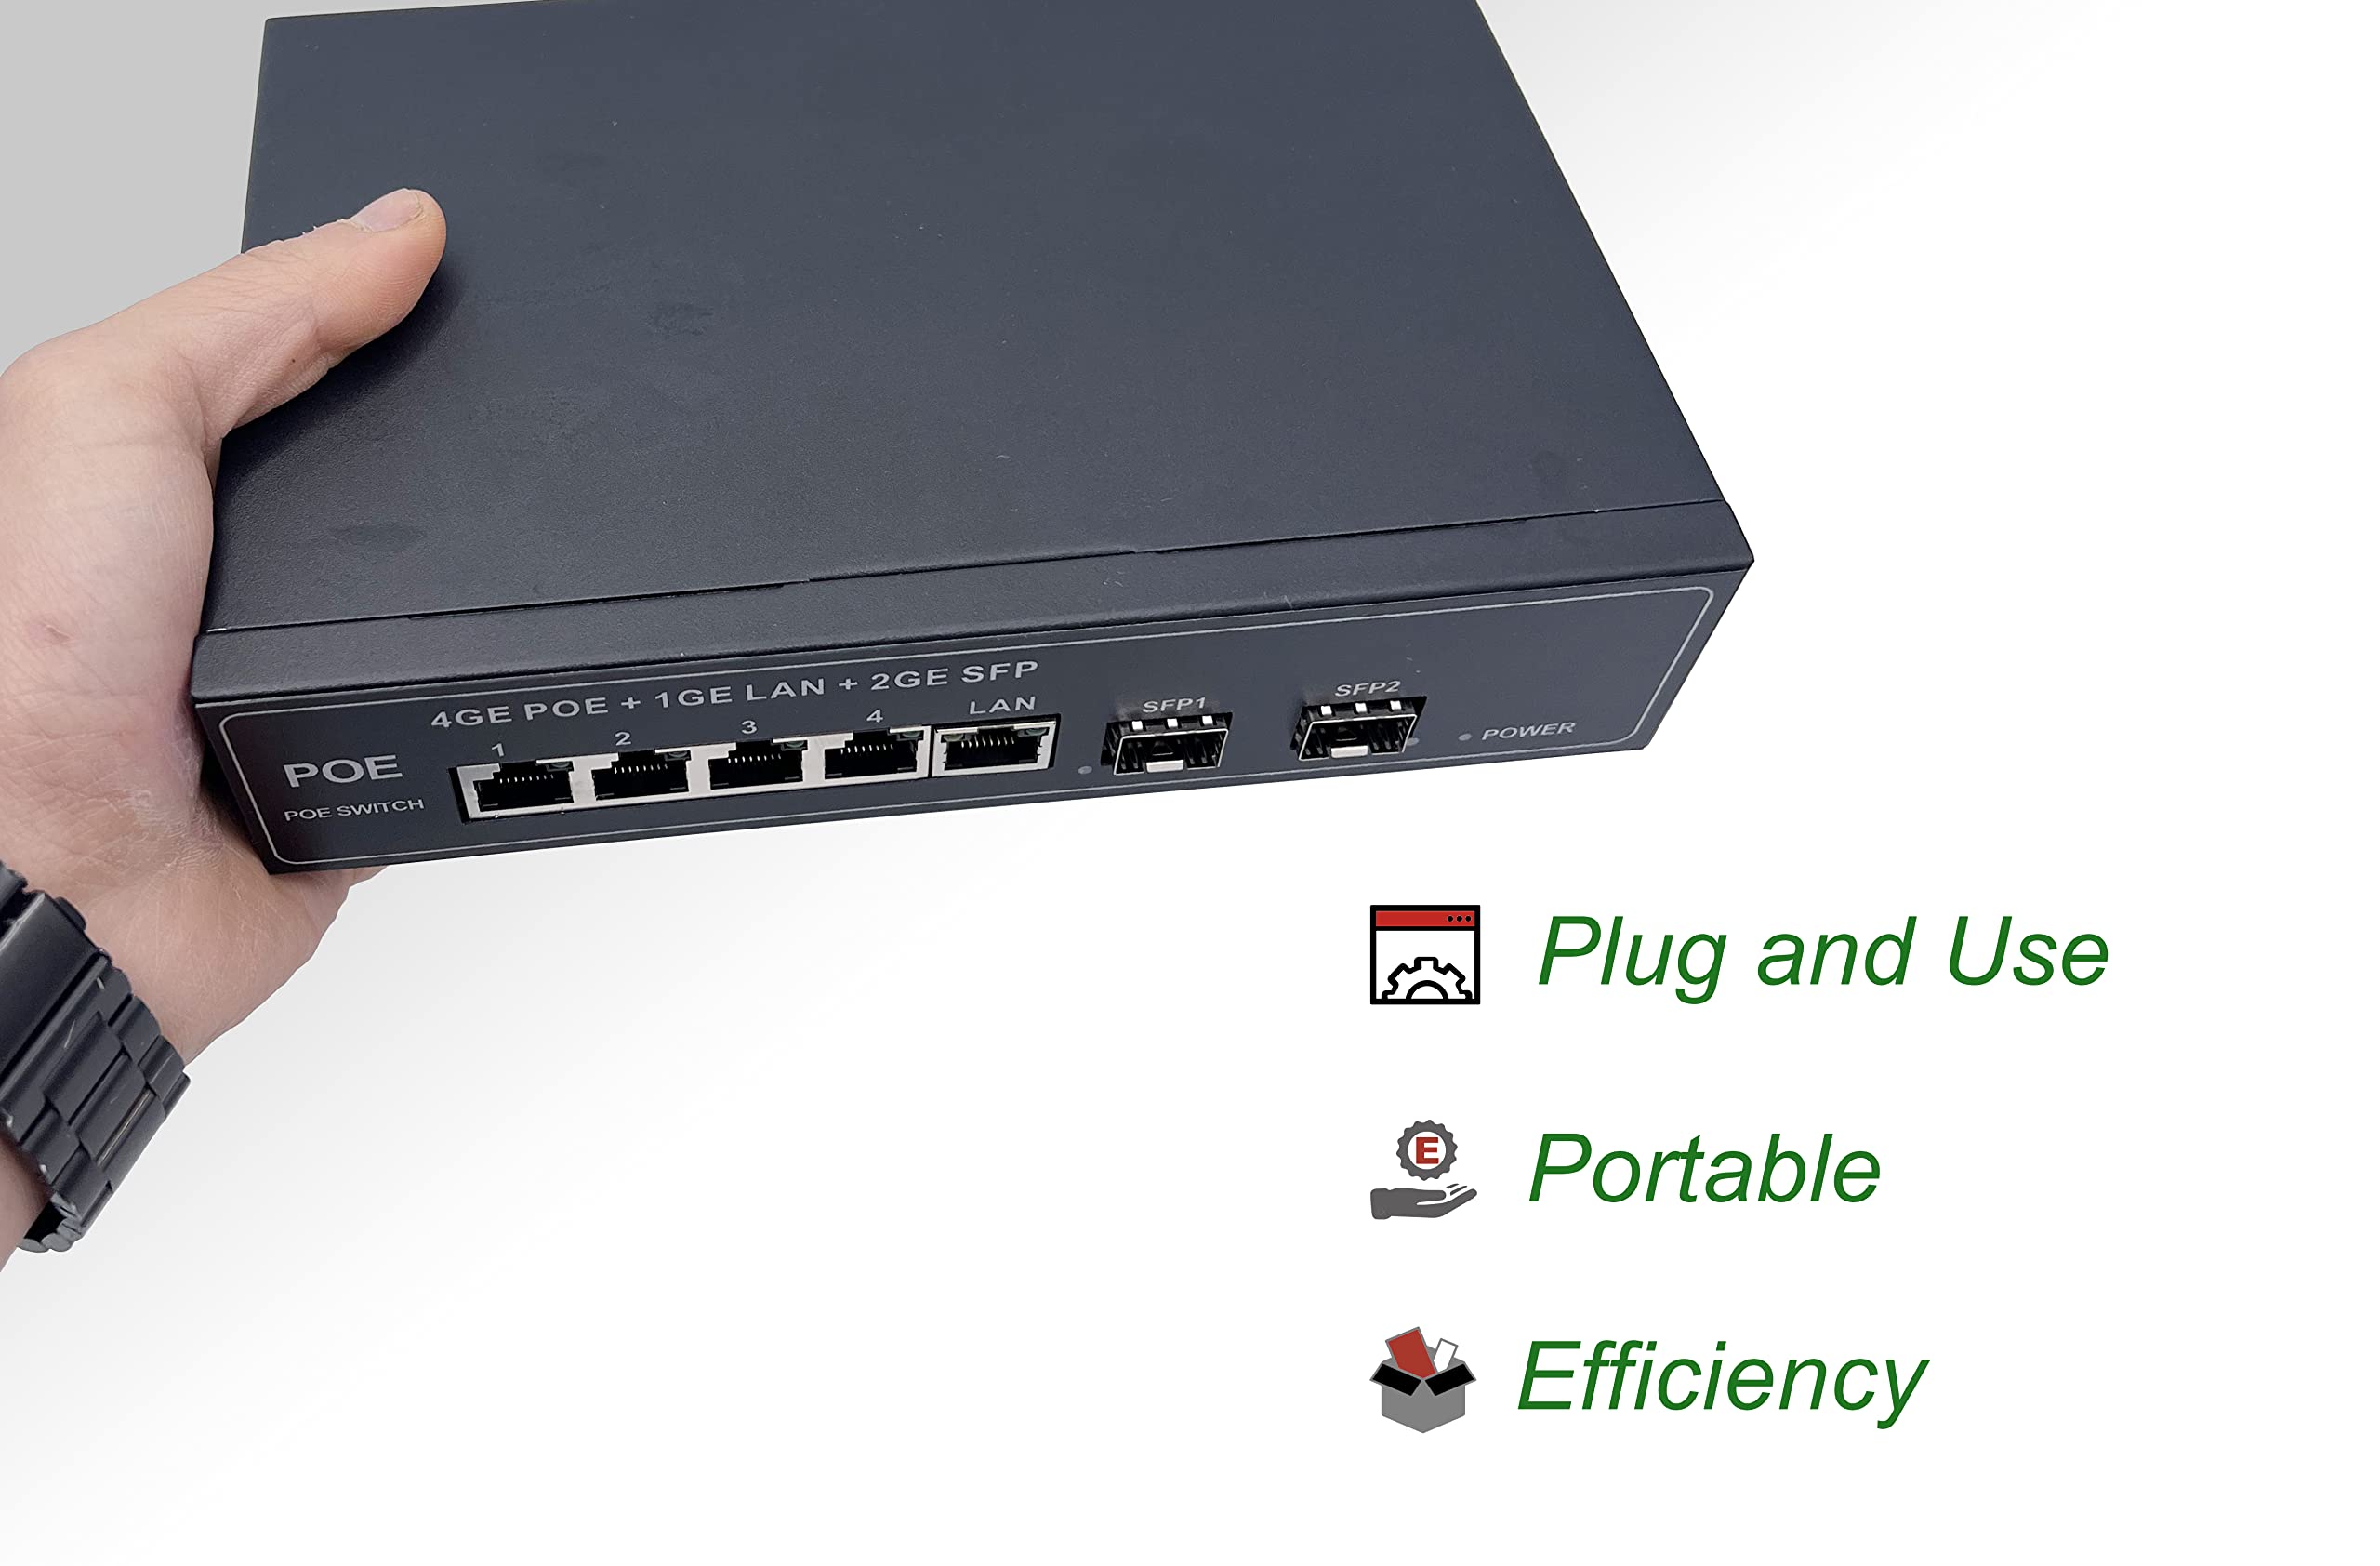 4-Port Full Gigabit PoE Switch with 1 GE & SFP Uplink, Support POE